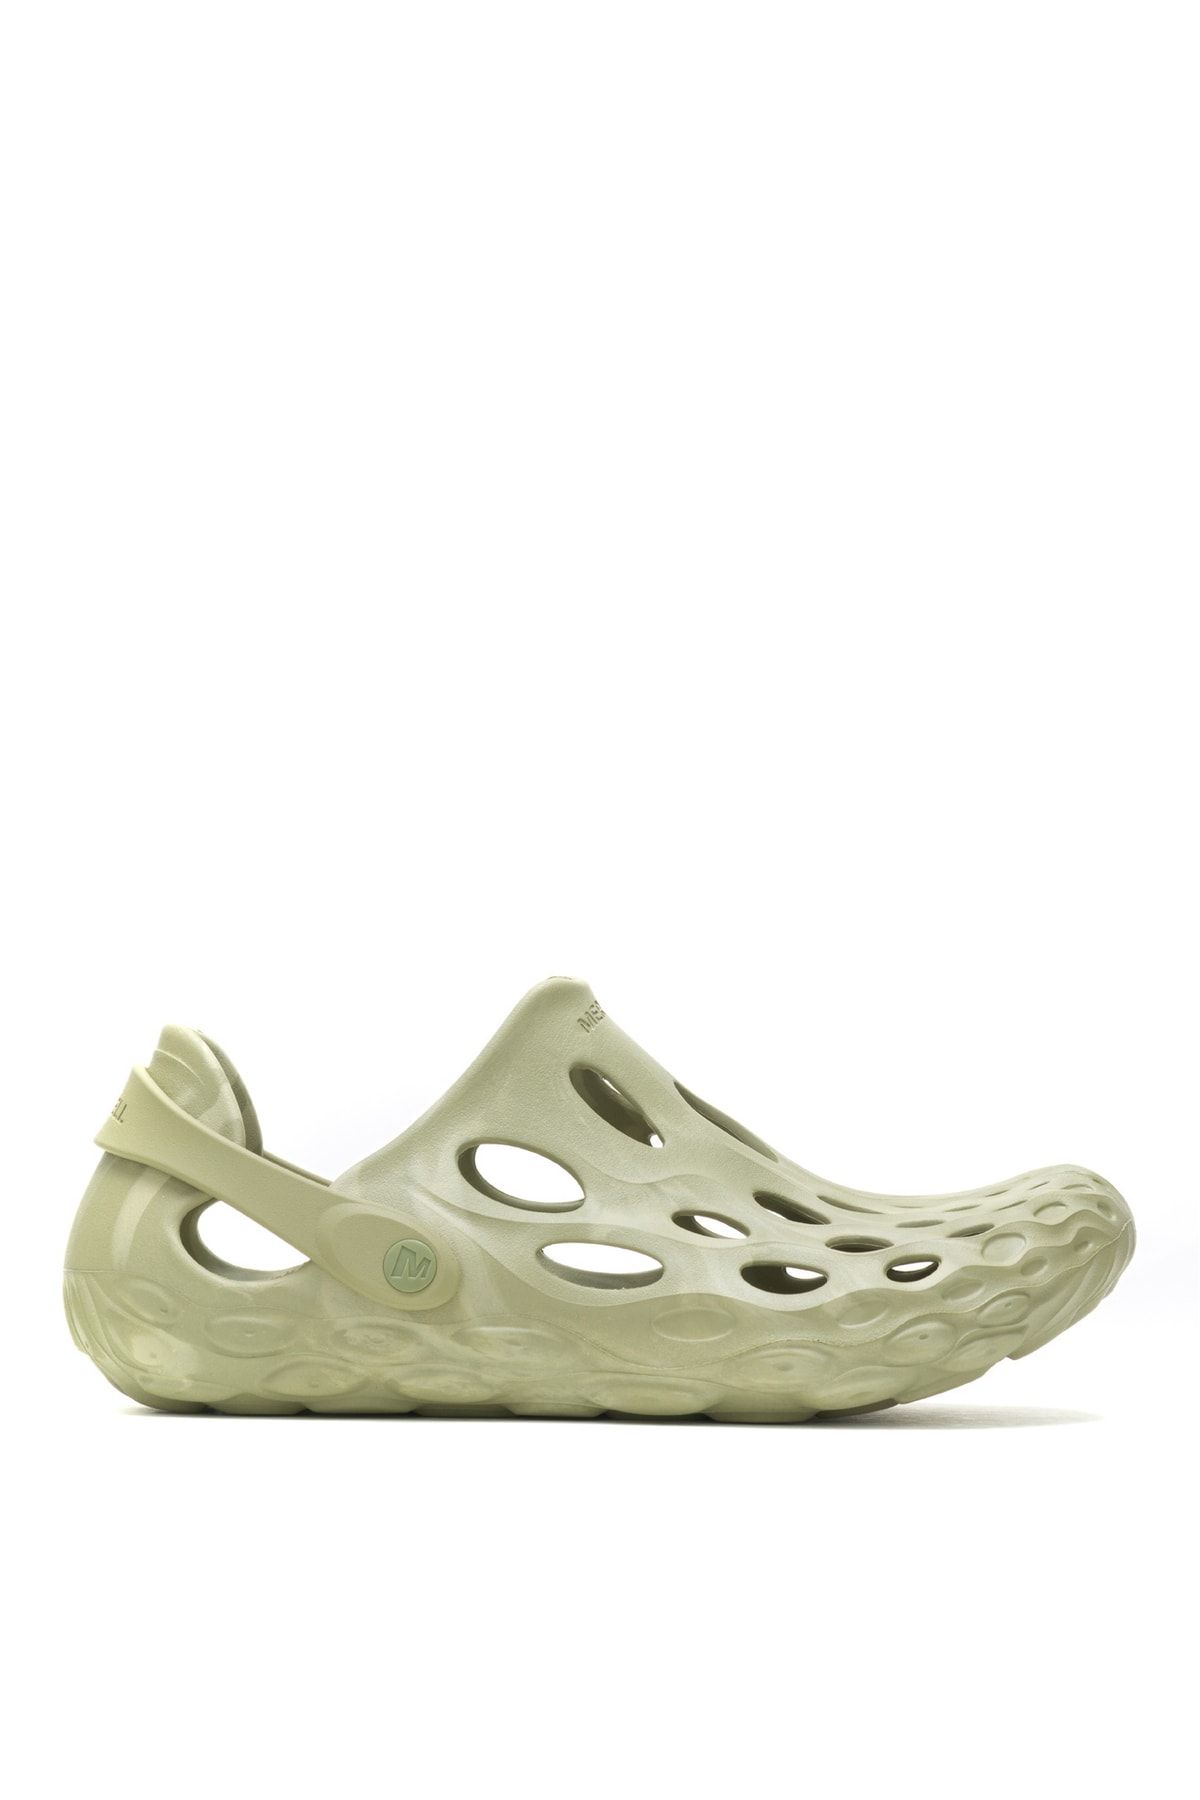 Merrell Hydro Moc Erkek Çok Renkli Günlük Stil Sandalet J003745